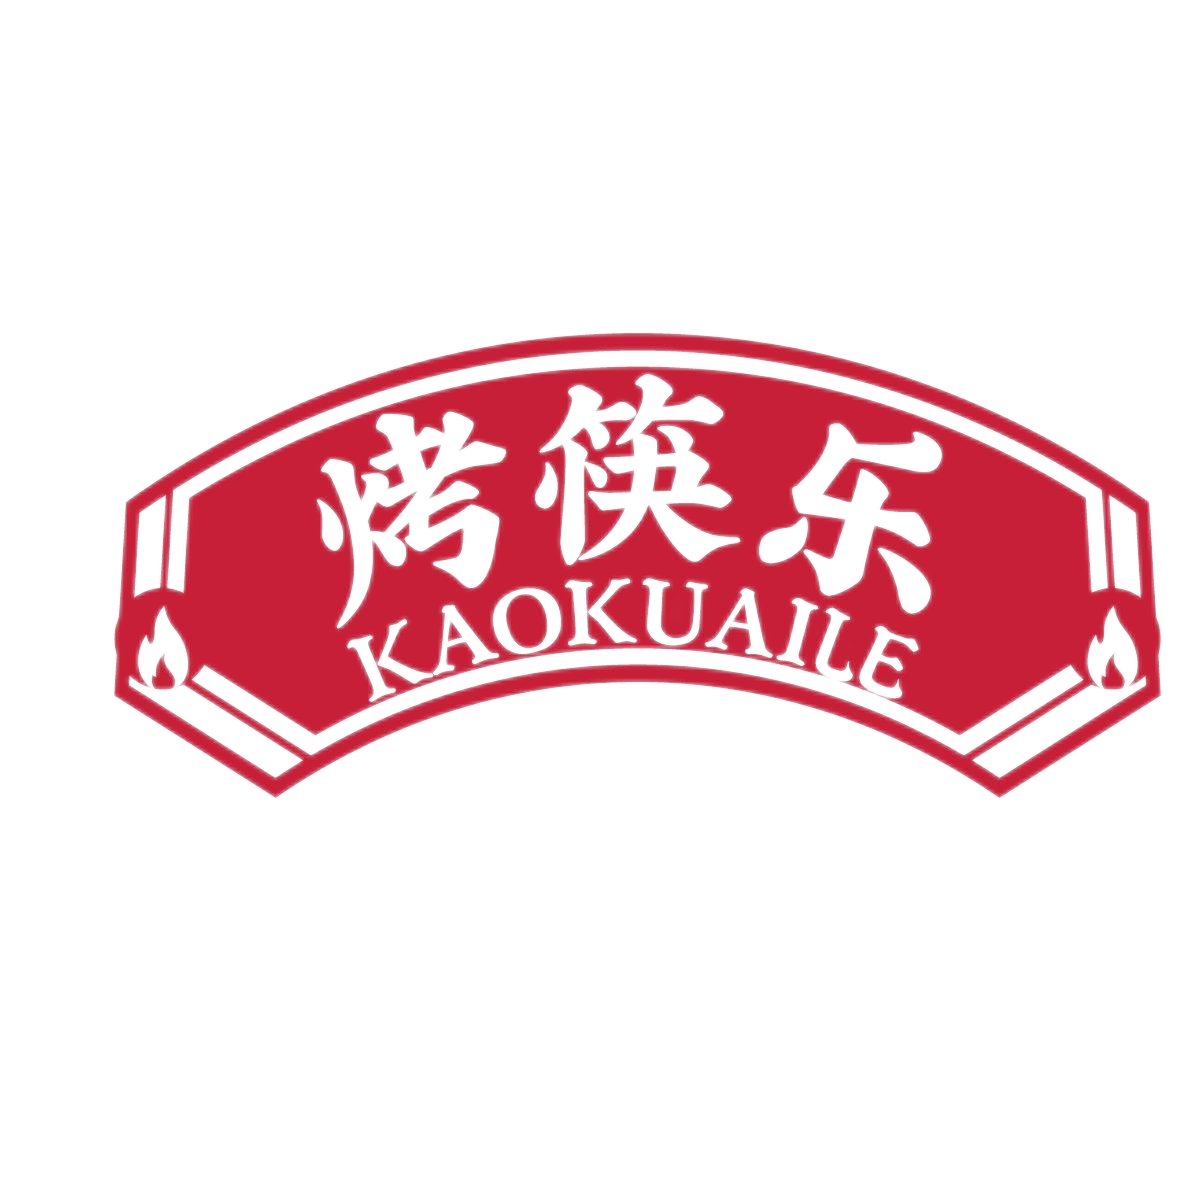 烤筷乐
KAOKUAILE